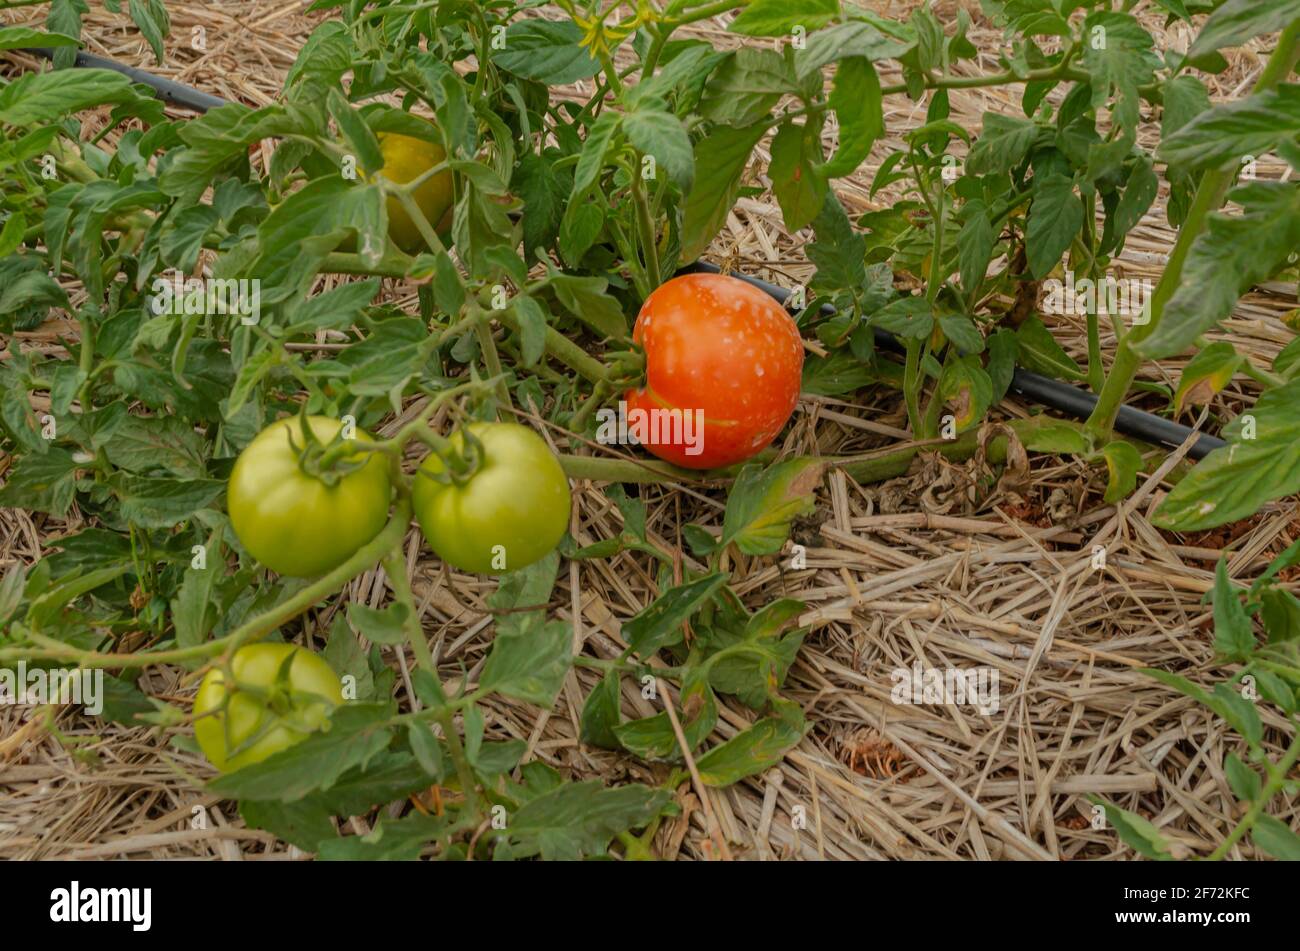 Ripe And Unripe Tomatoes In Garden Stock Photo